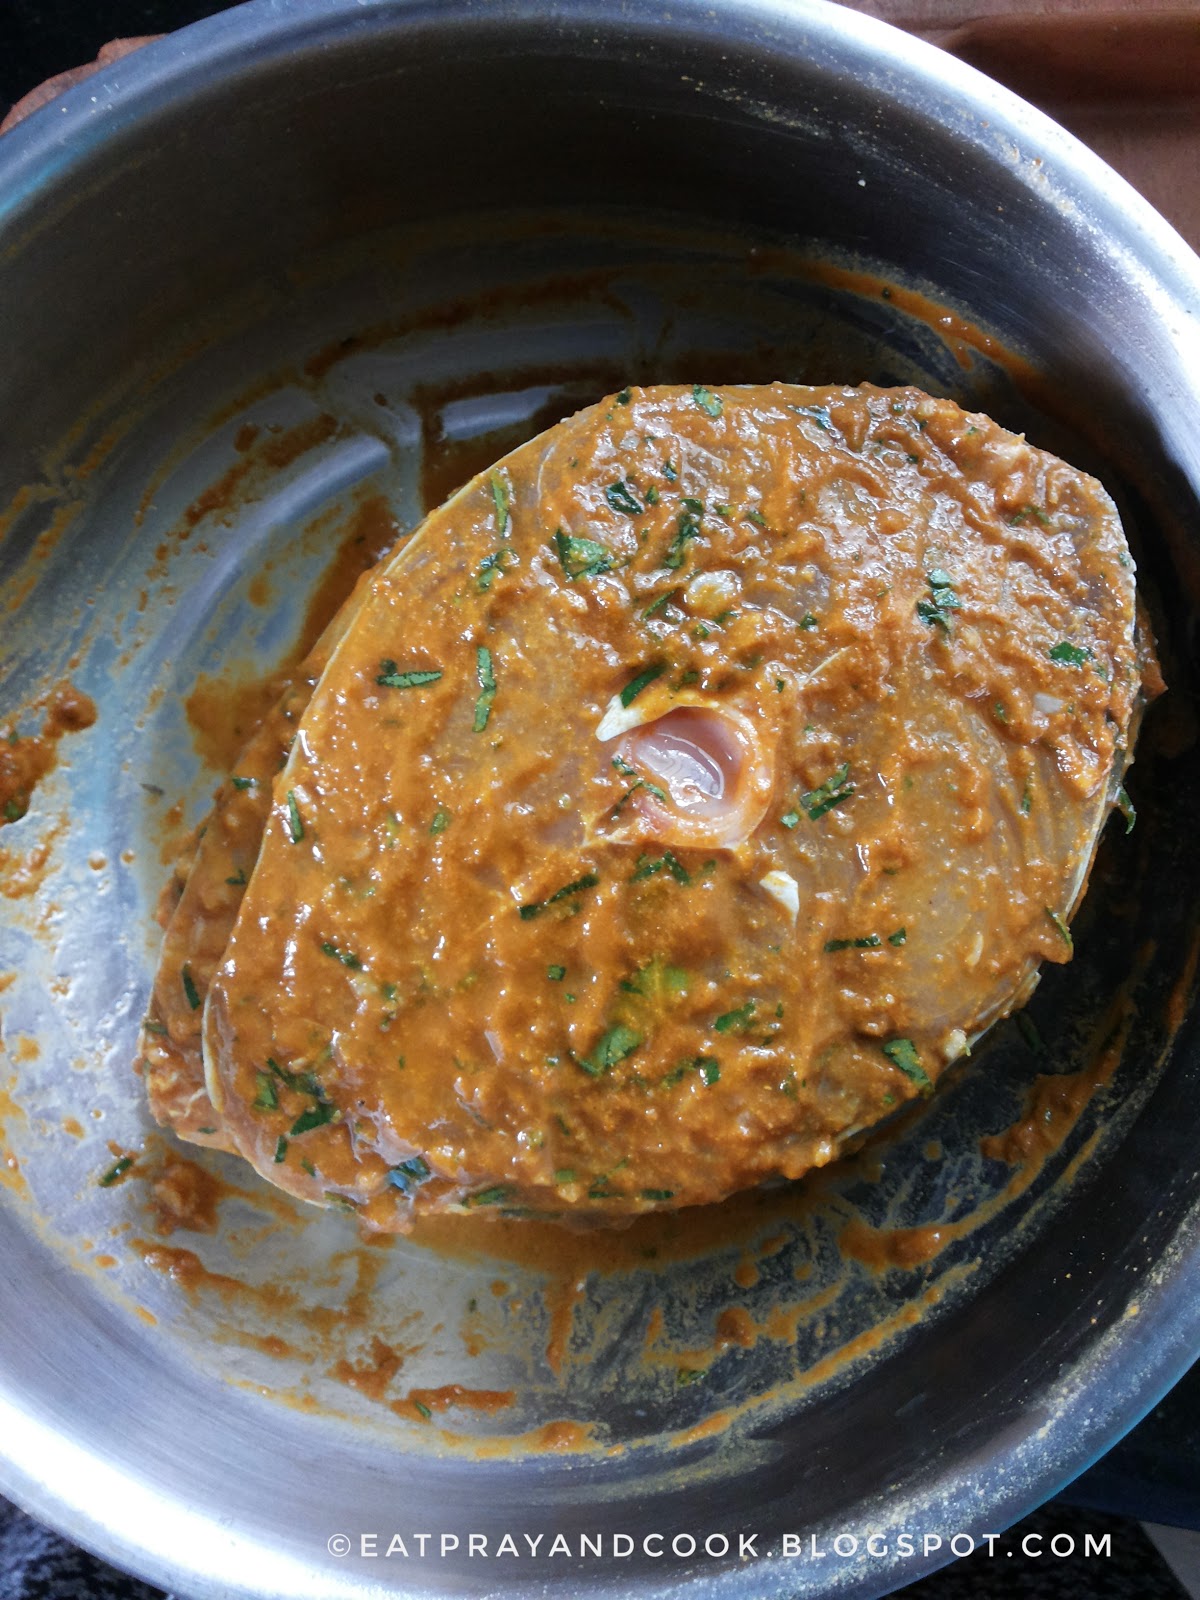 Eat Pray and Cook: Vanjaram Fish / Seer/King Fish Fry